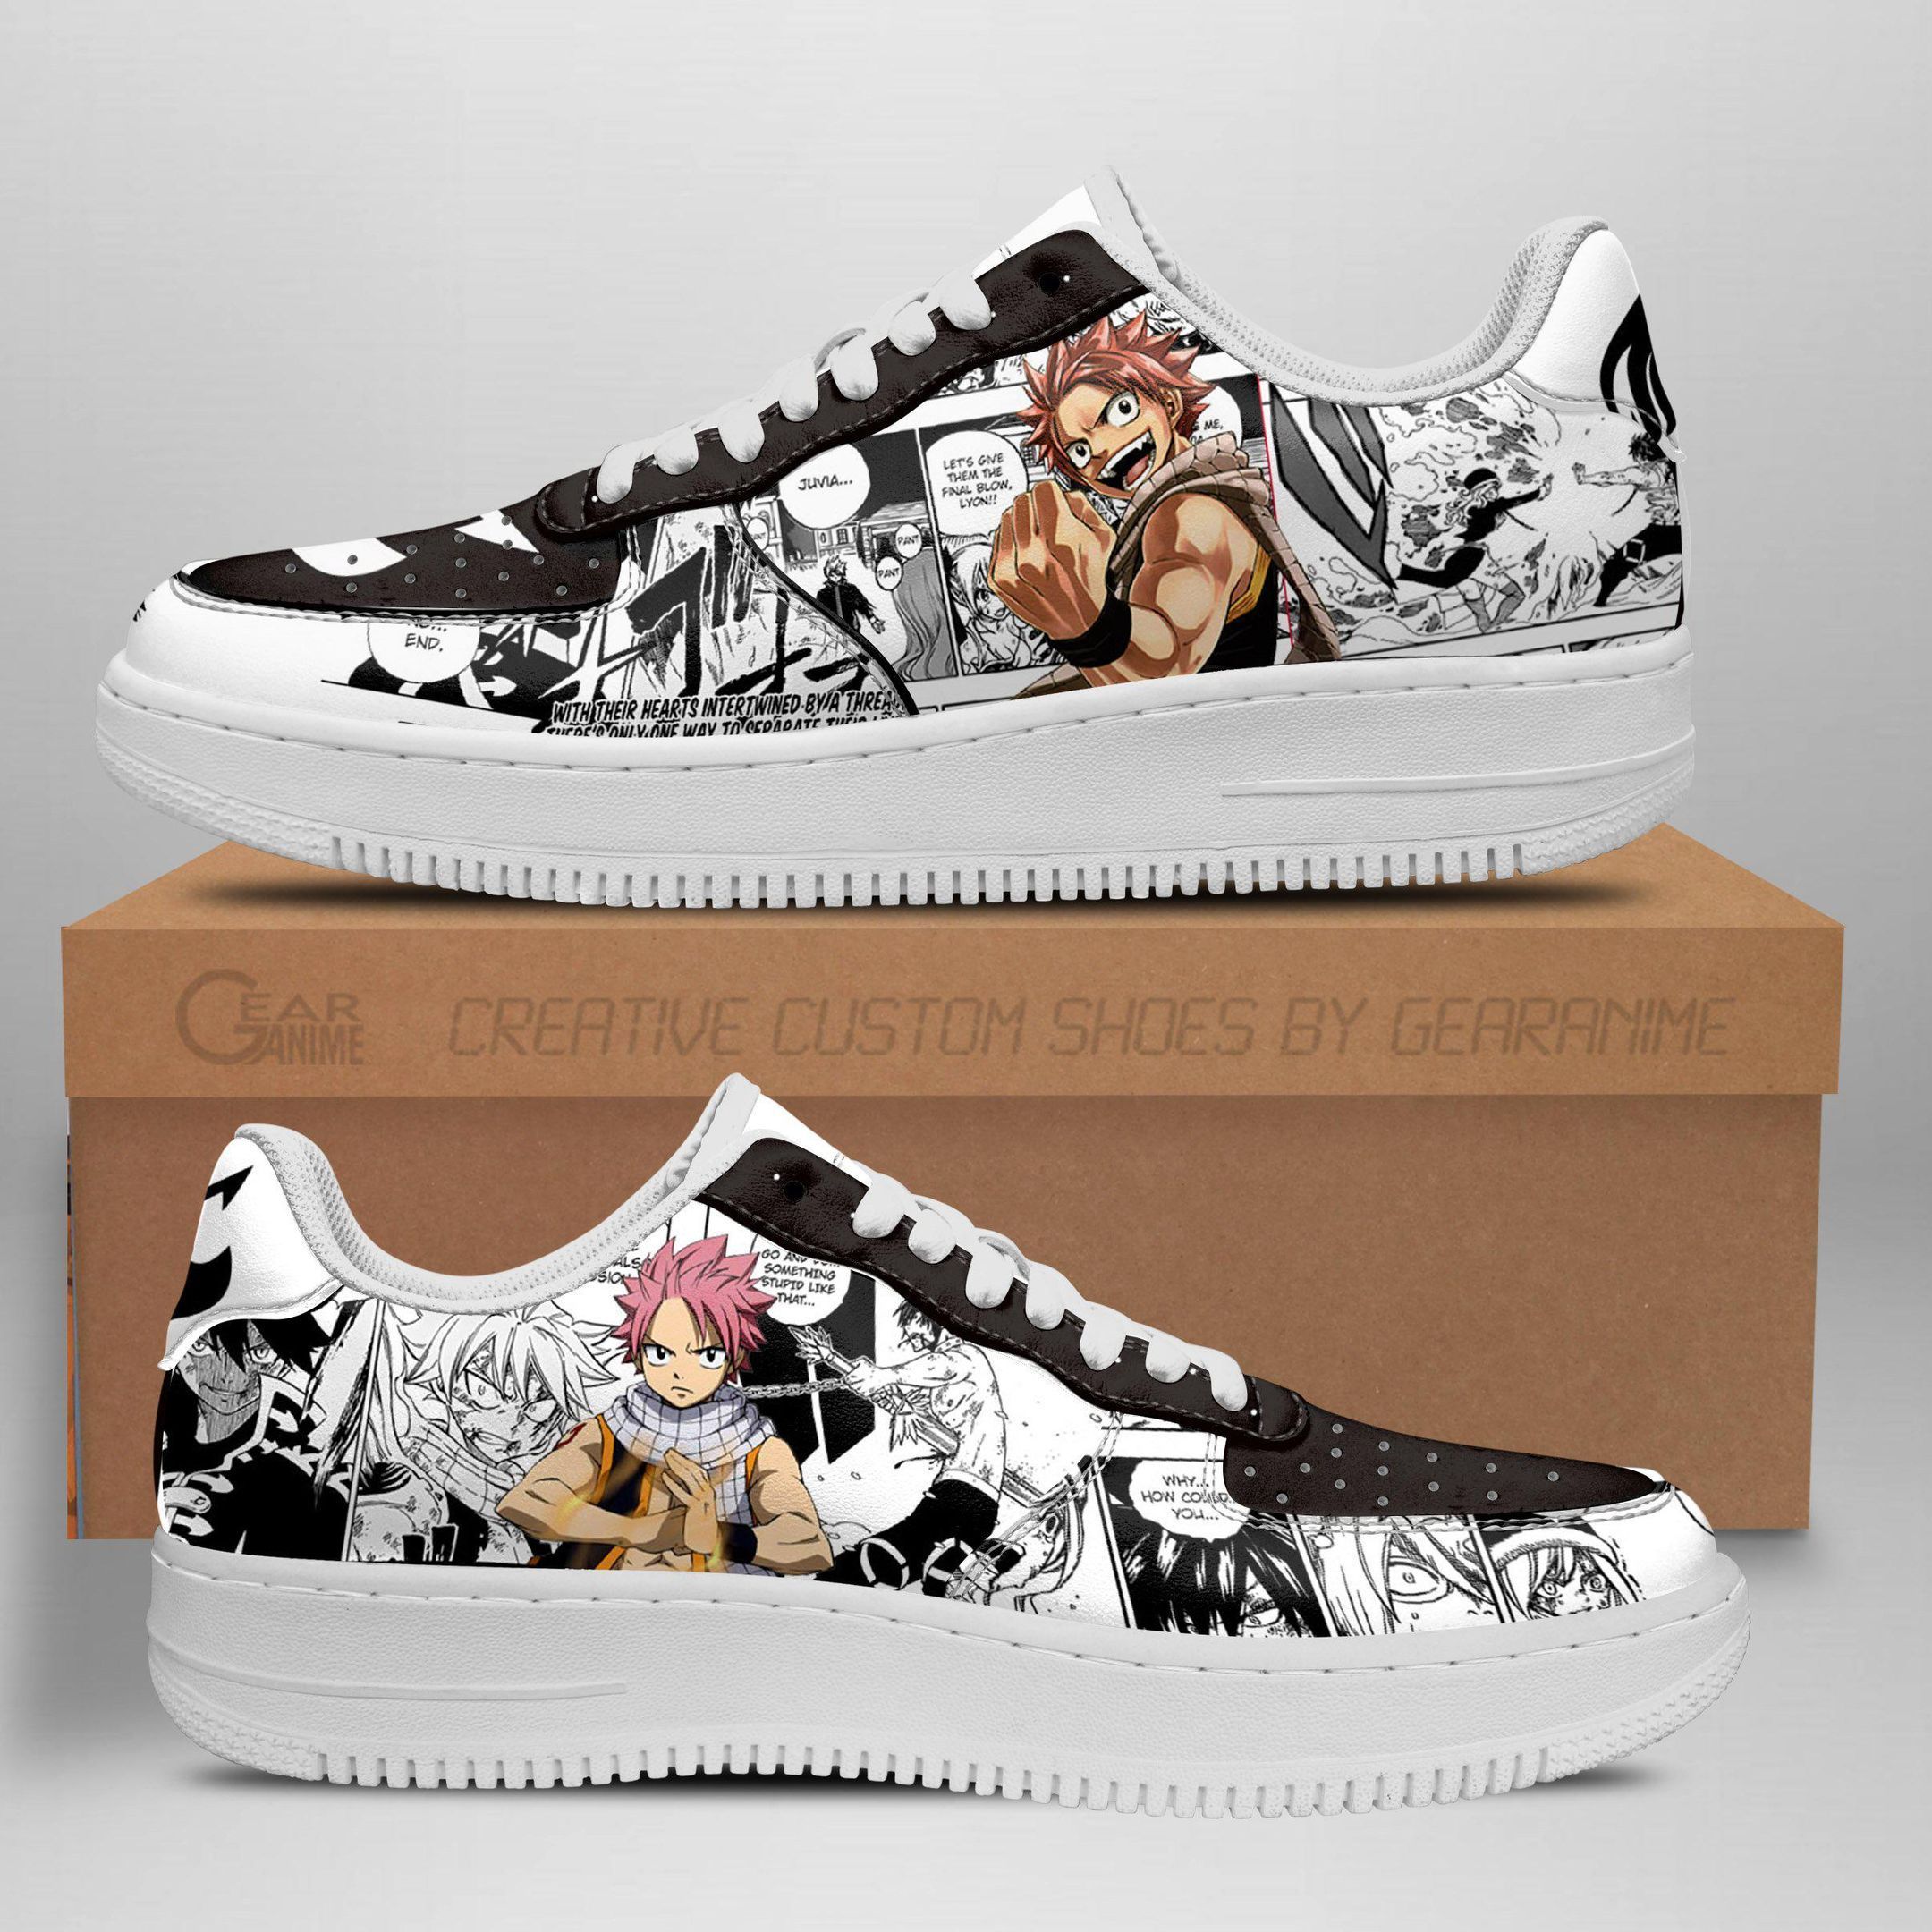 Fairy Tail Air Shoes Manga Anime Shoes Fan Gift Idea GO1012